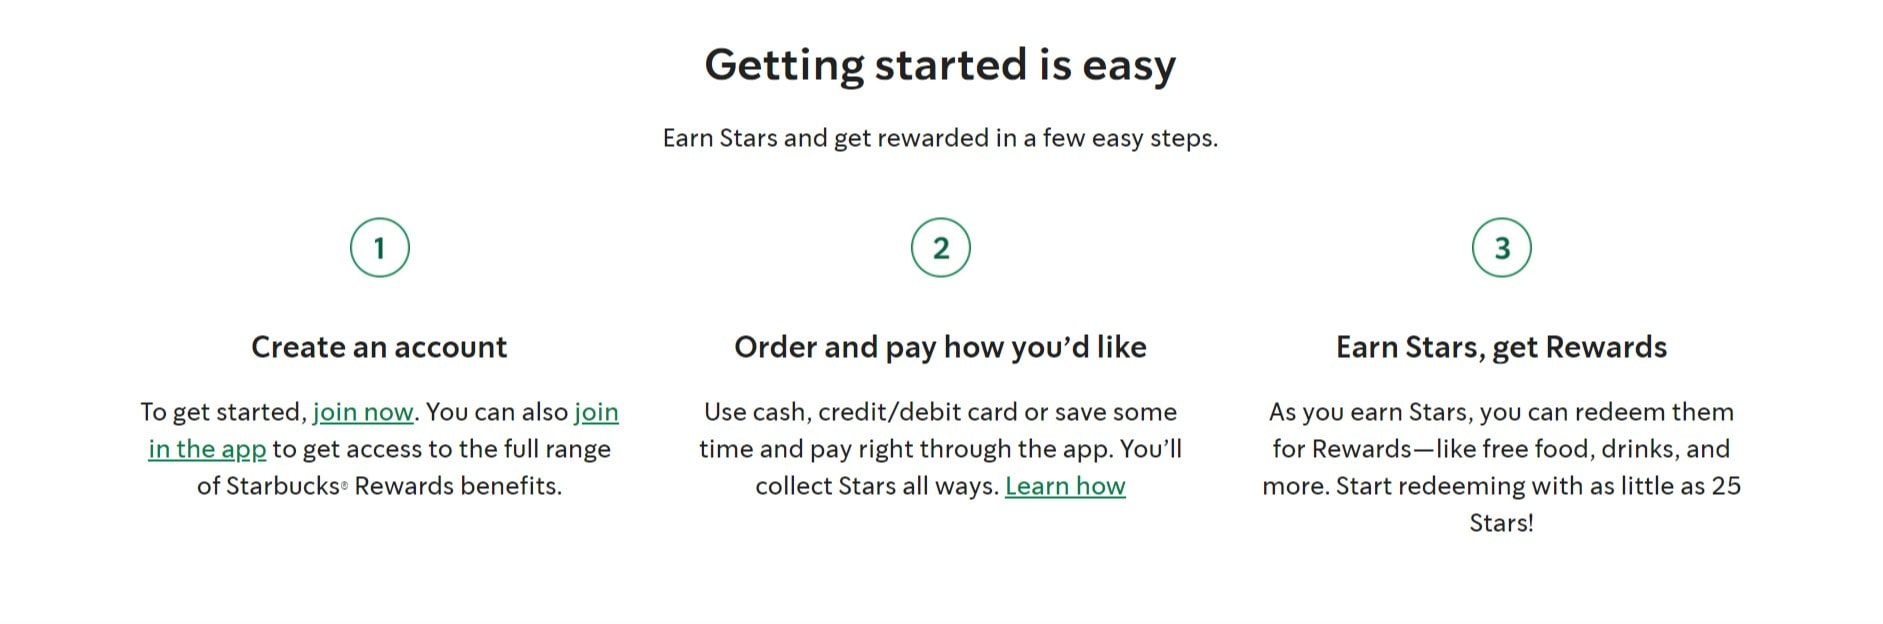 starbucks point reward program to build customer loyalty